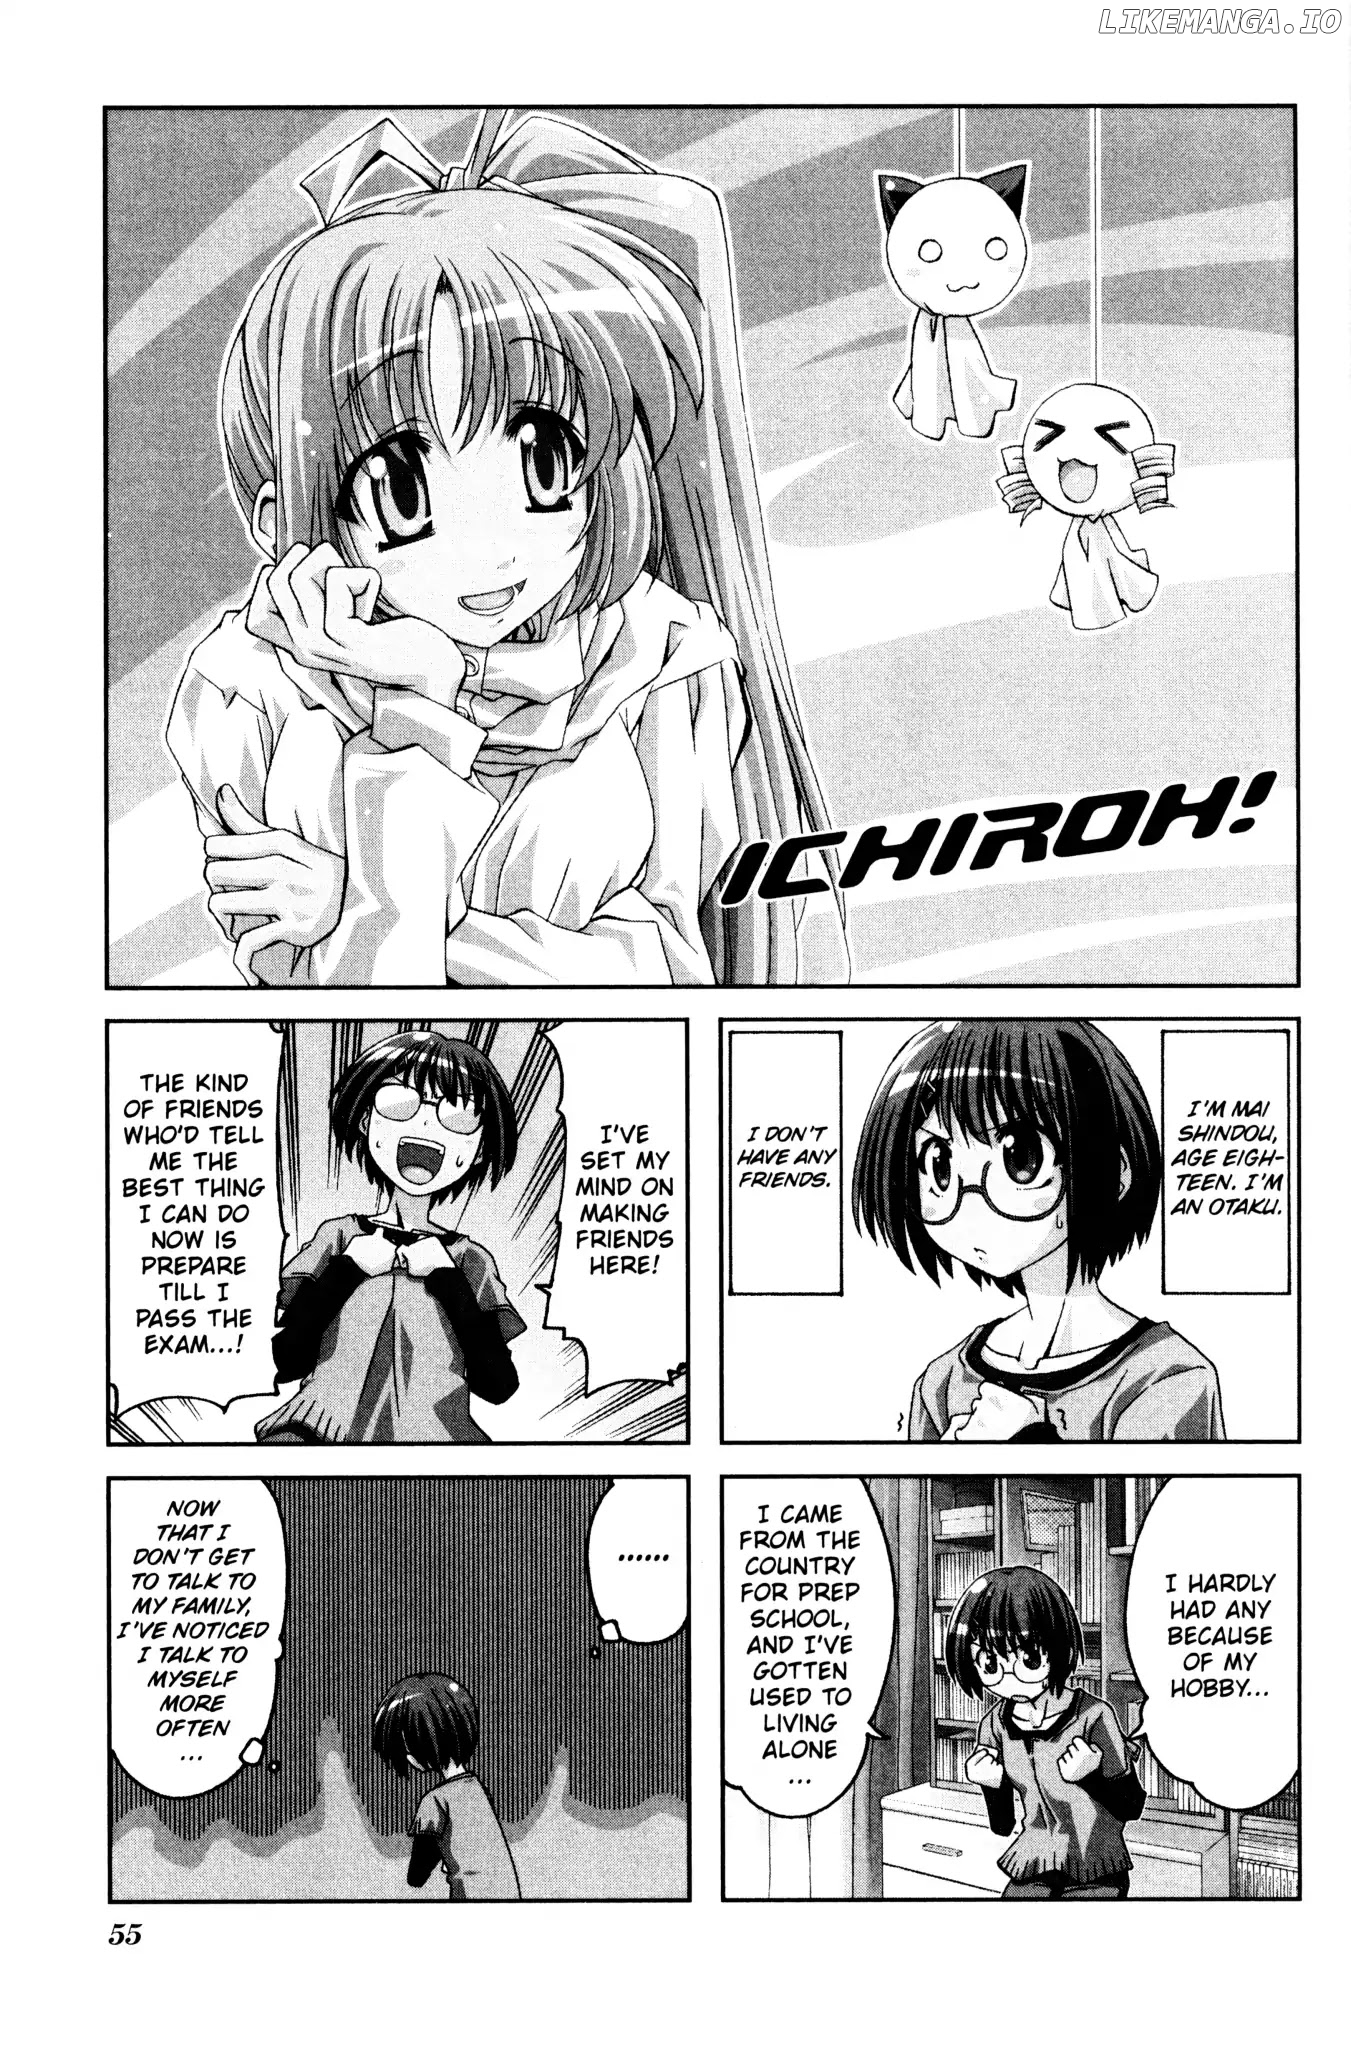 Ichiroh! chapter 8 - page 1